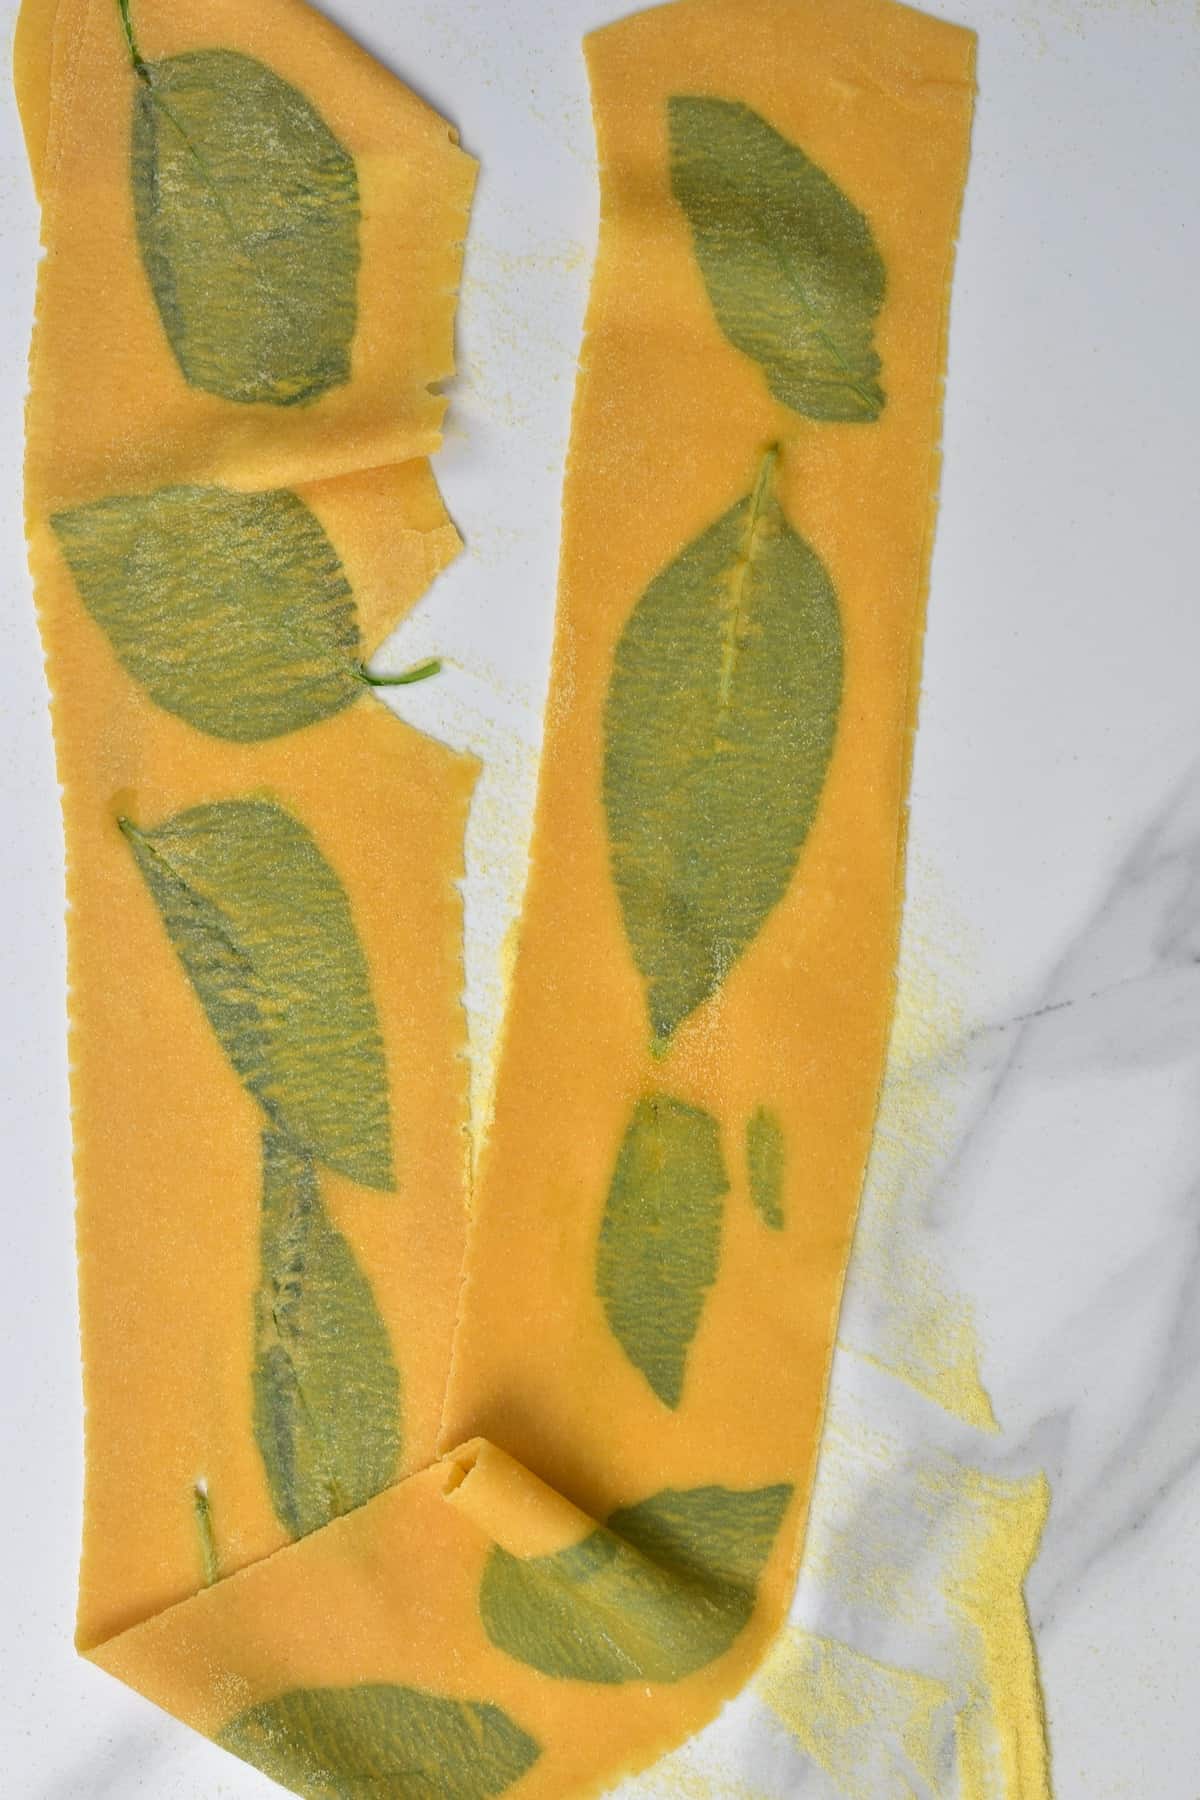 Thin sheet of pasta dough with laminated basil leaves